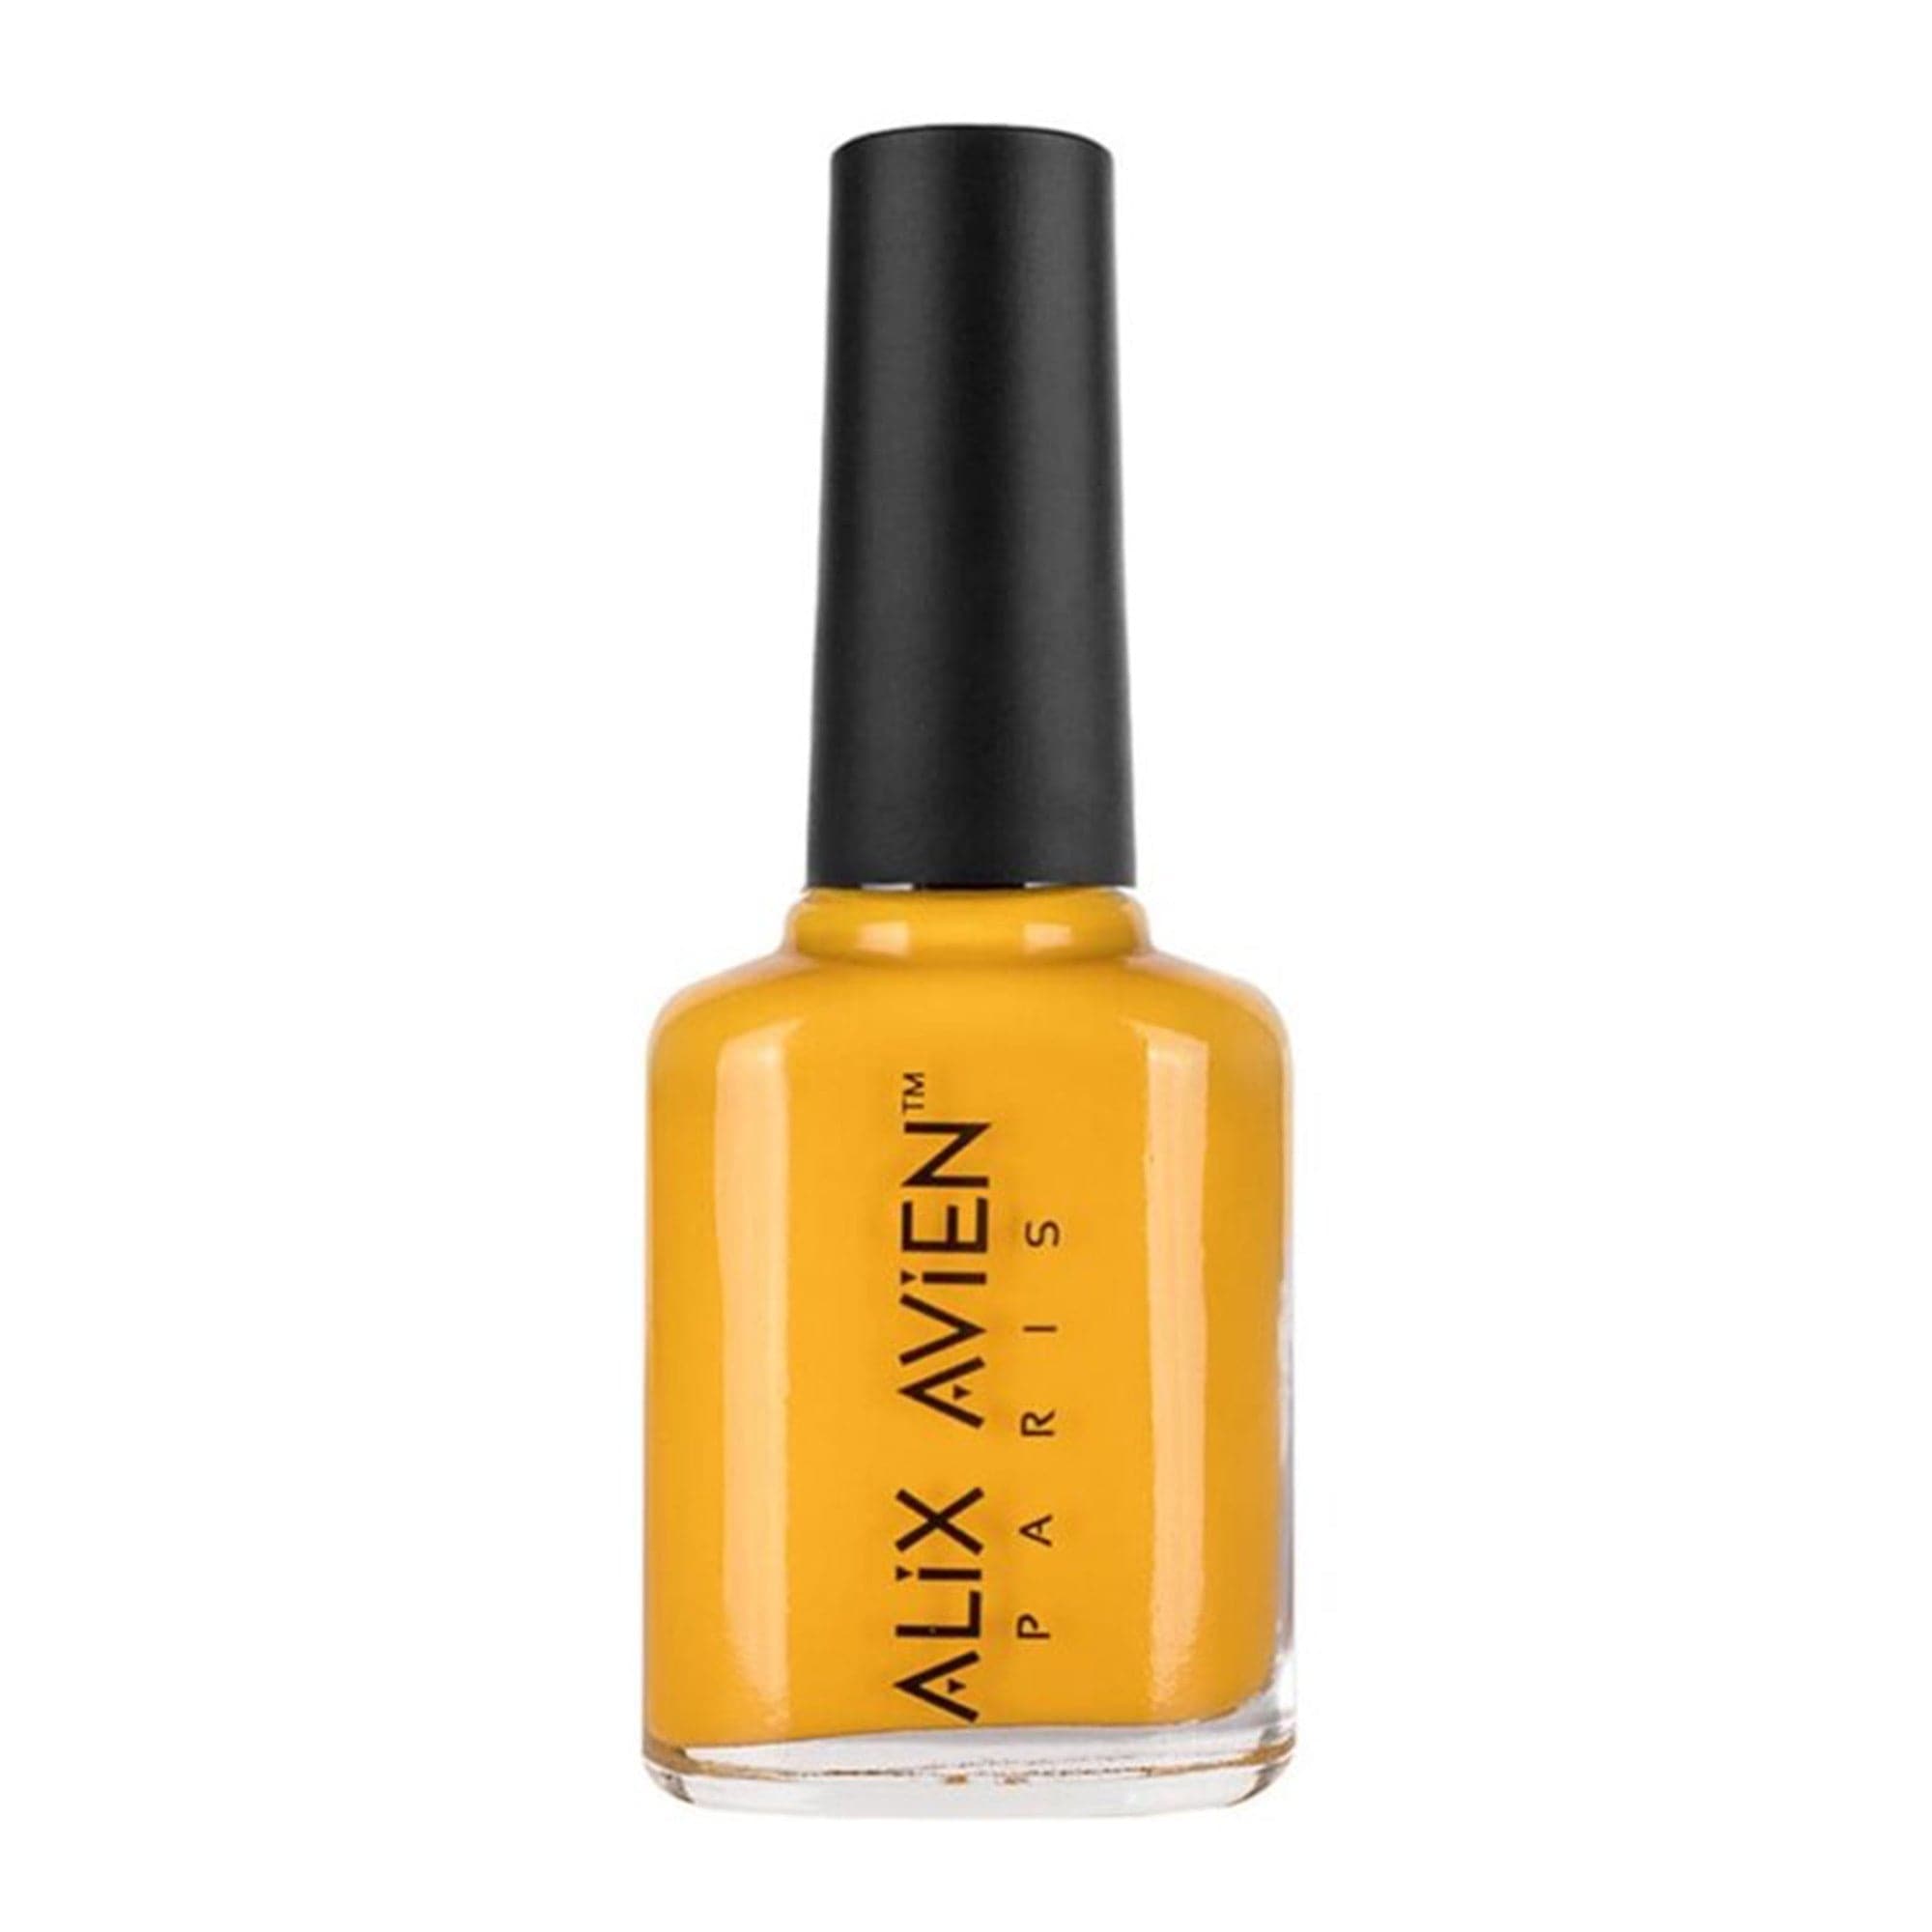 Alix Avien - Nail Polish No.68 (Bumblebee Yellow) - Eson Direct